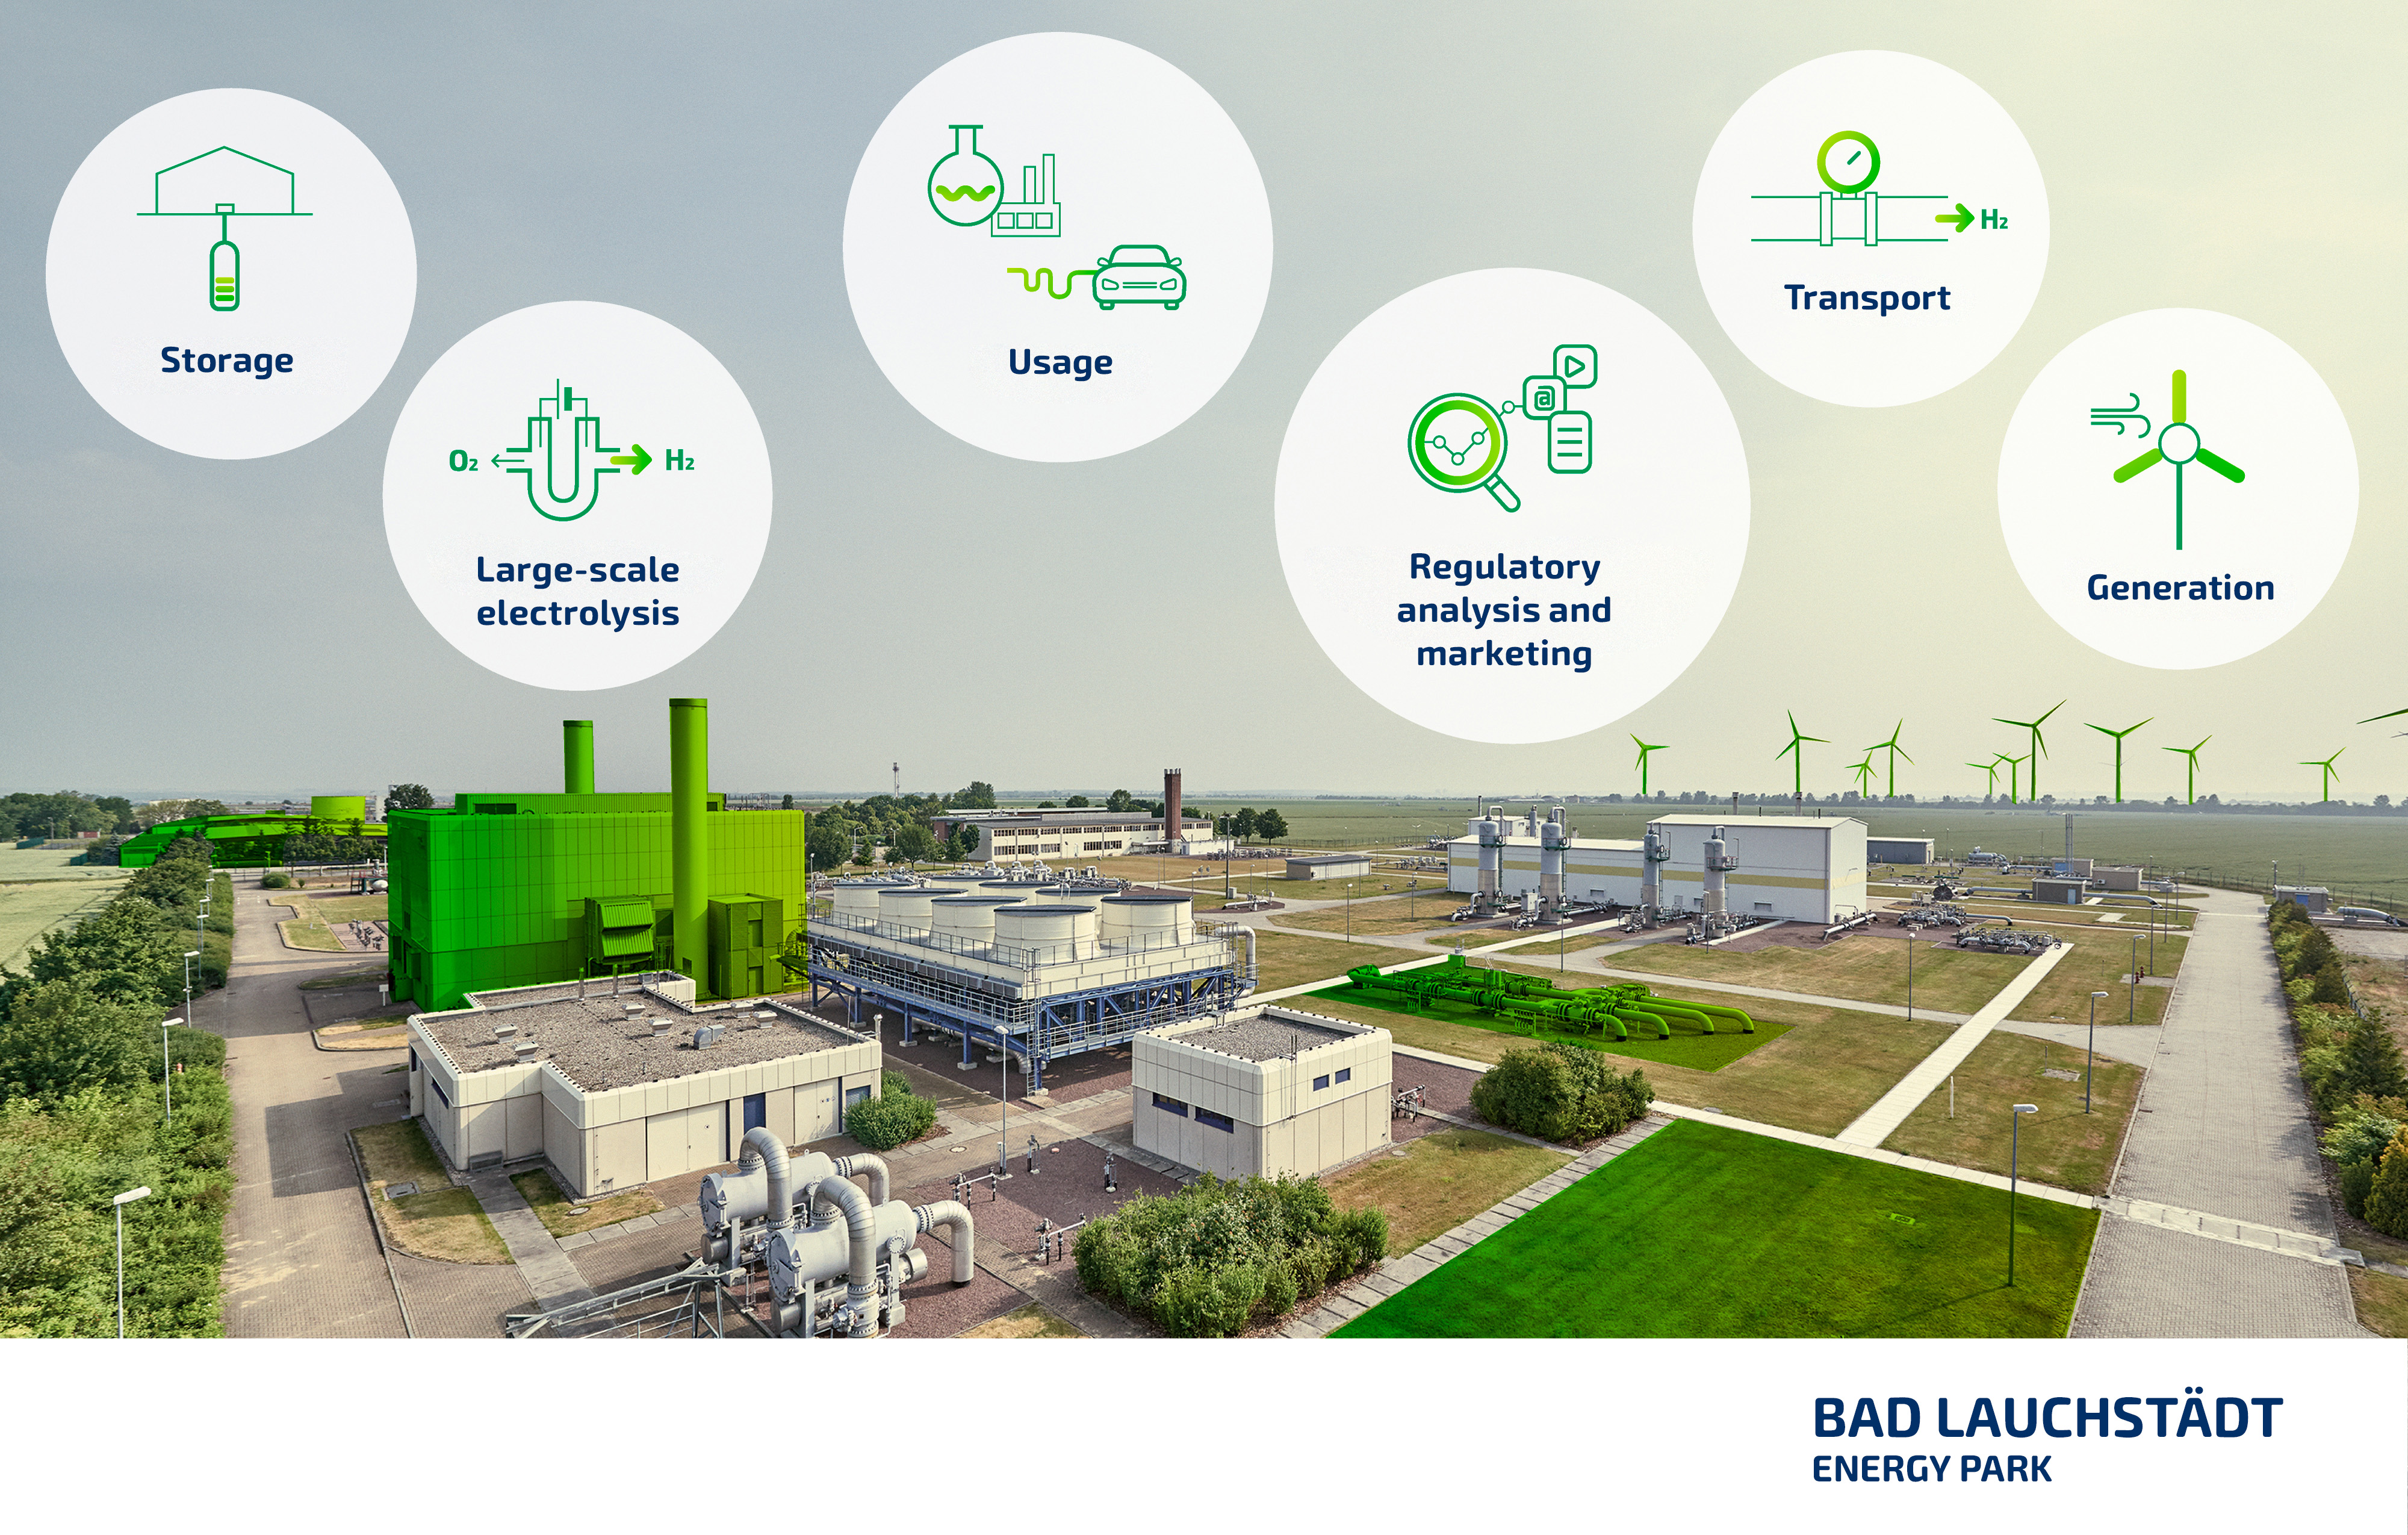 Setup of the ‘Bad Lauchstädt Energy Park’ (schematic presentation)